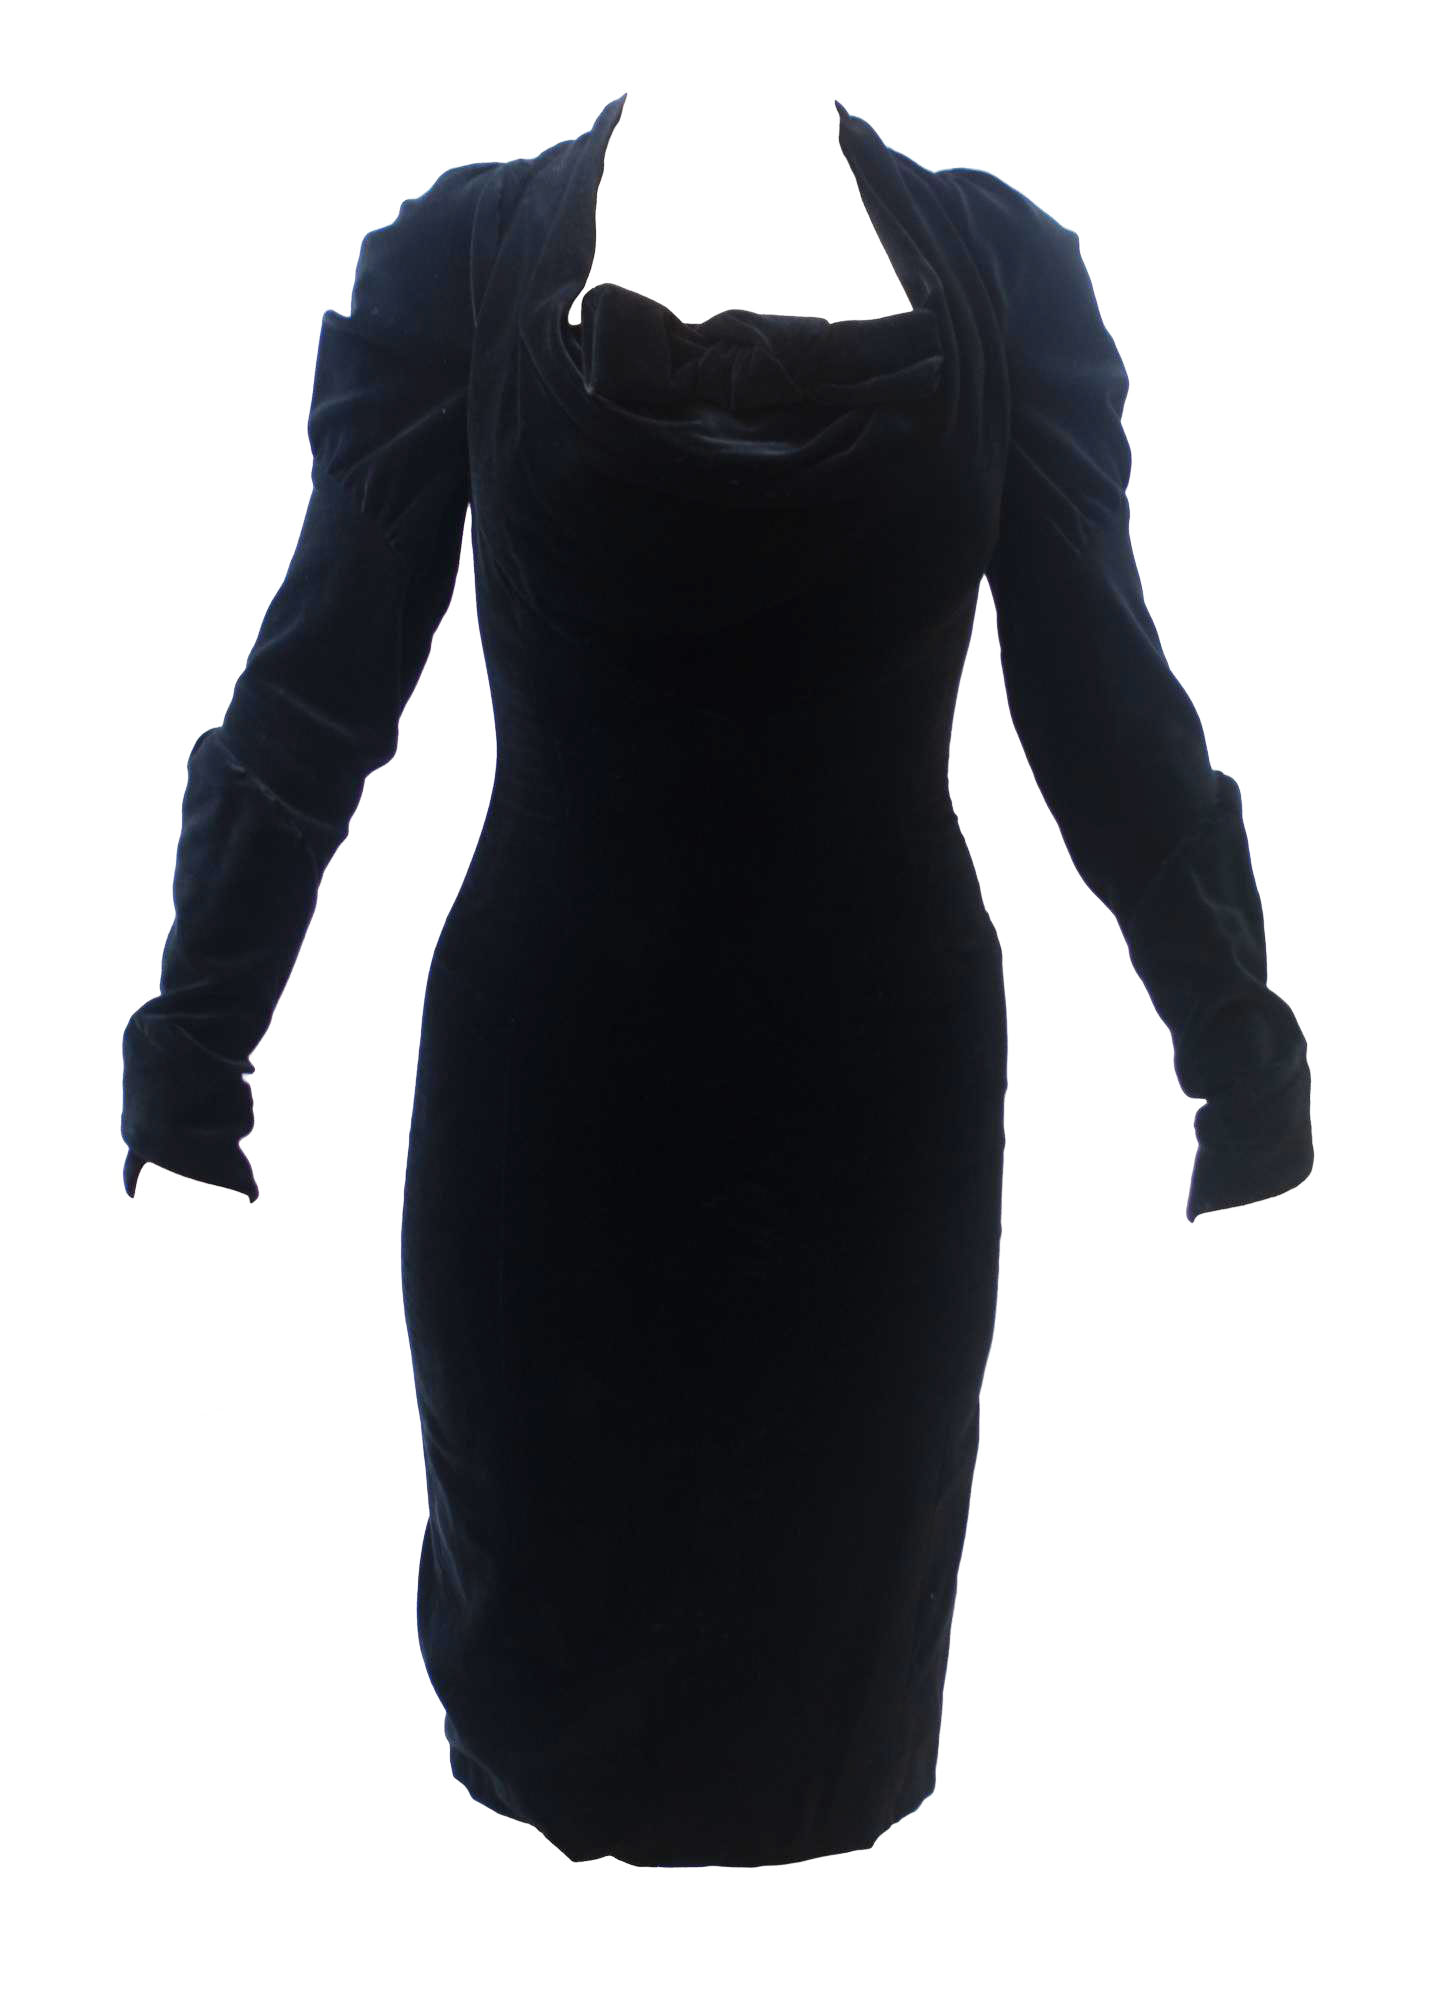 Vivienne Westwood BOW DRESS Description: Black velvet lining tight dress with...